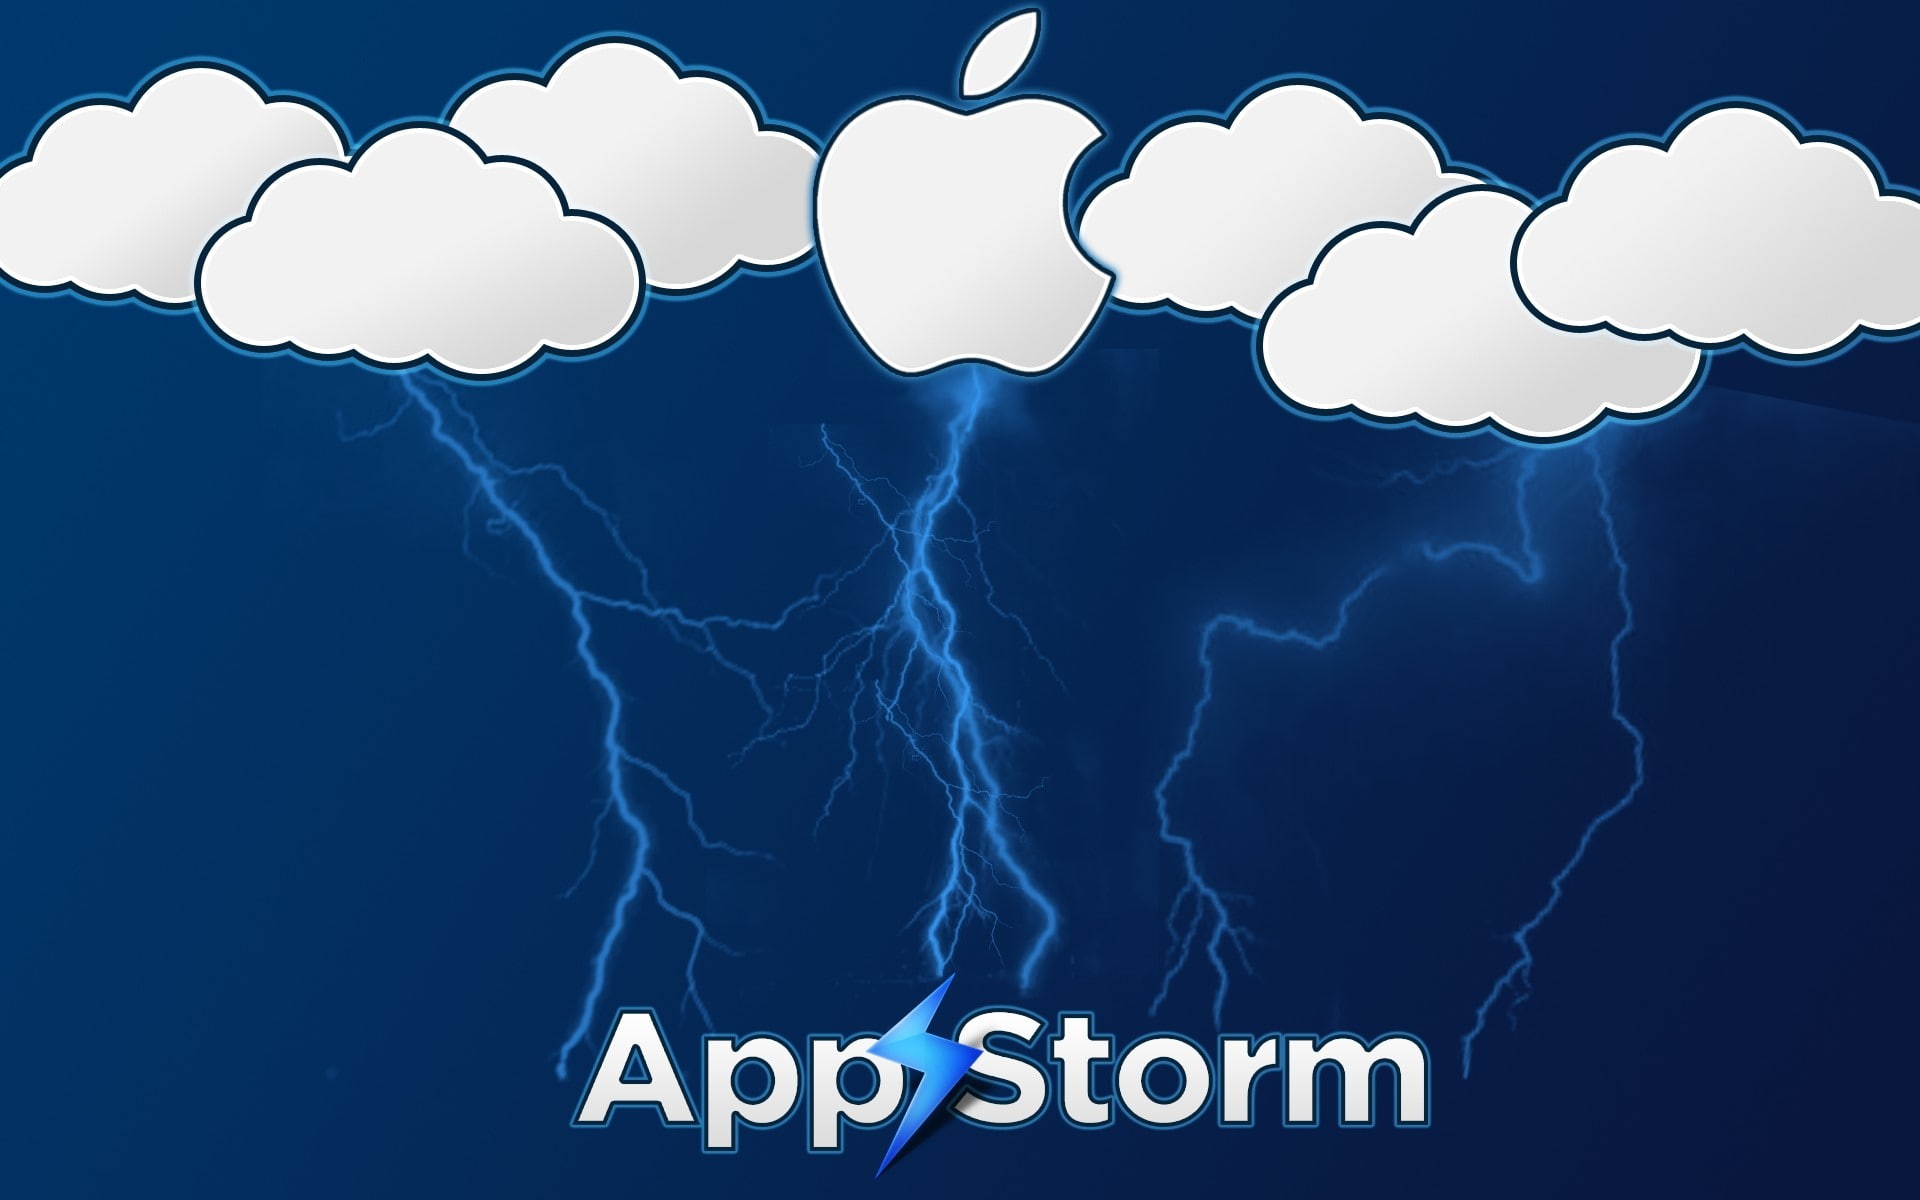 App storm, Apple, Mac, Blue, White, Clouds, Lightning, cloud - sky